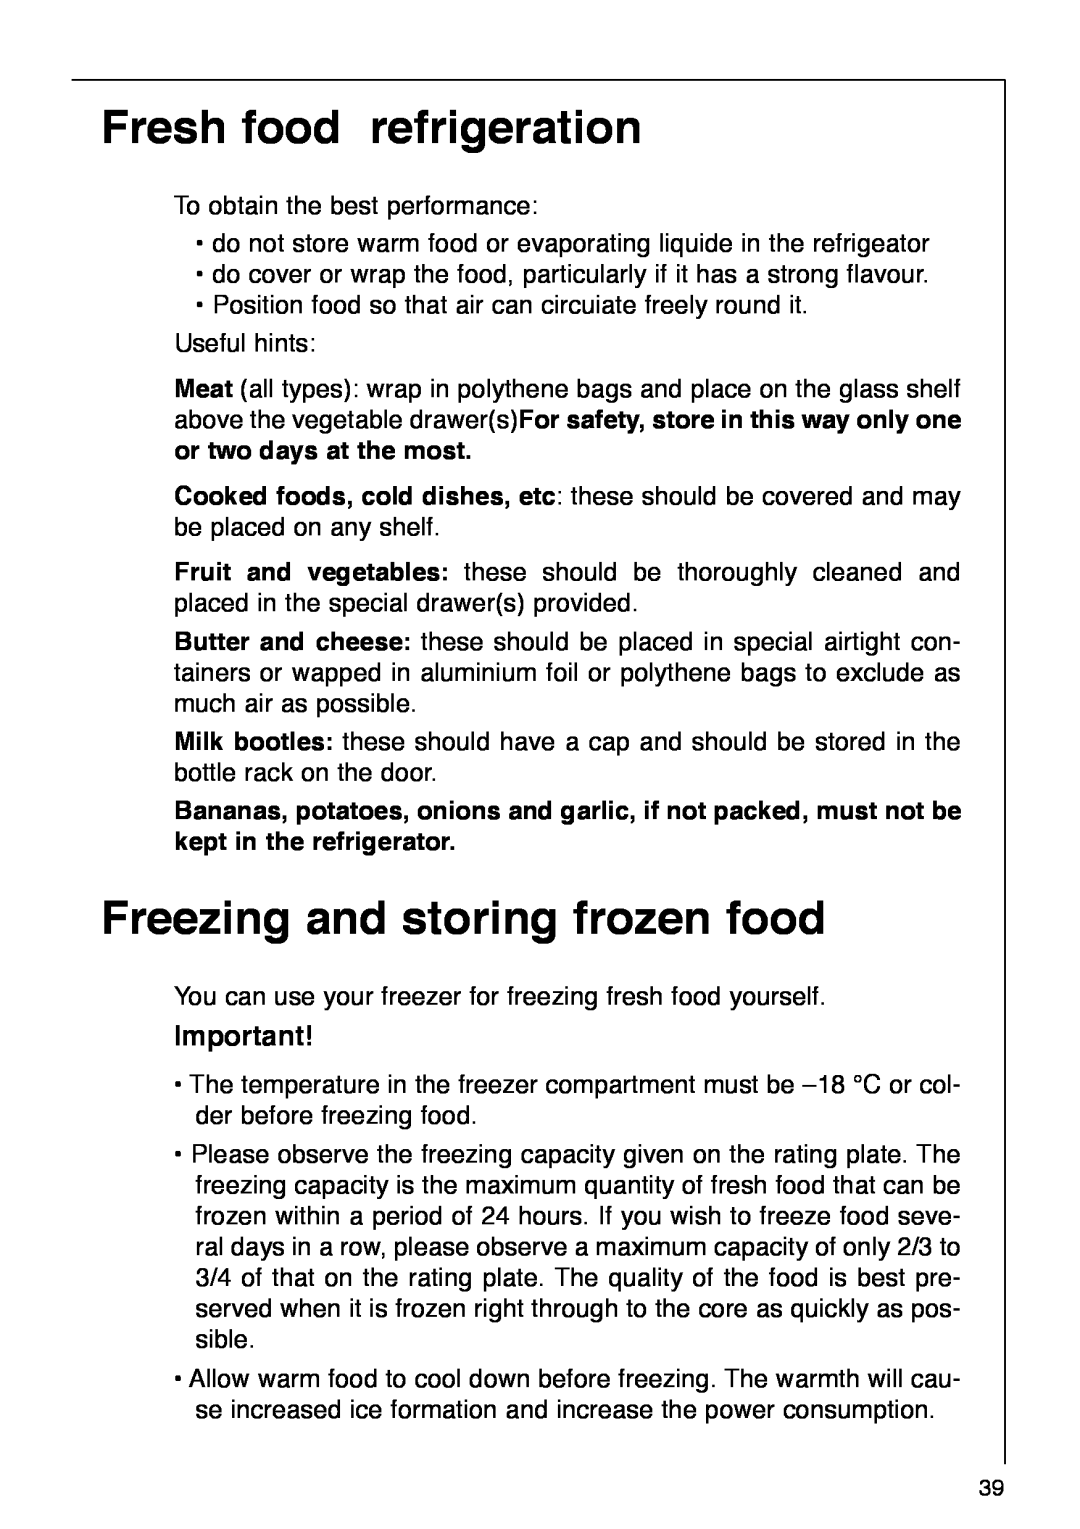 AEG 290-6I installation instructions Fresh food refrigeration, Freezing and storing frozen food 